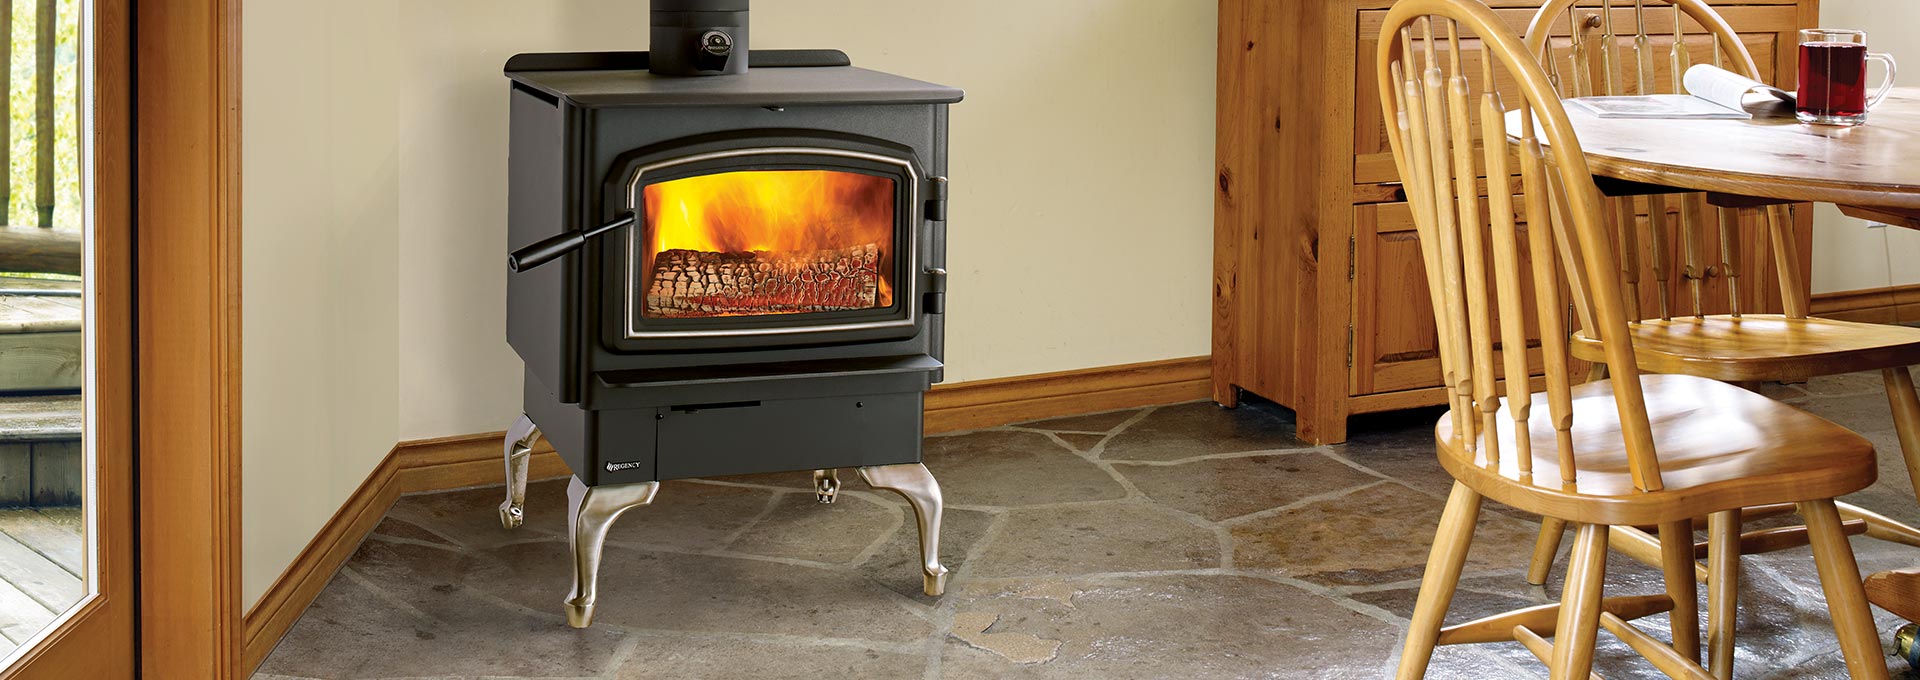 Wood Burner Fireplace Ideas Elegant Wood Stoves